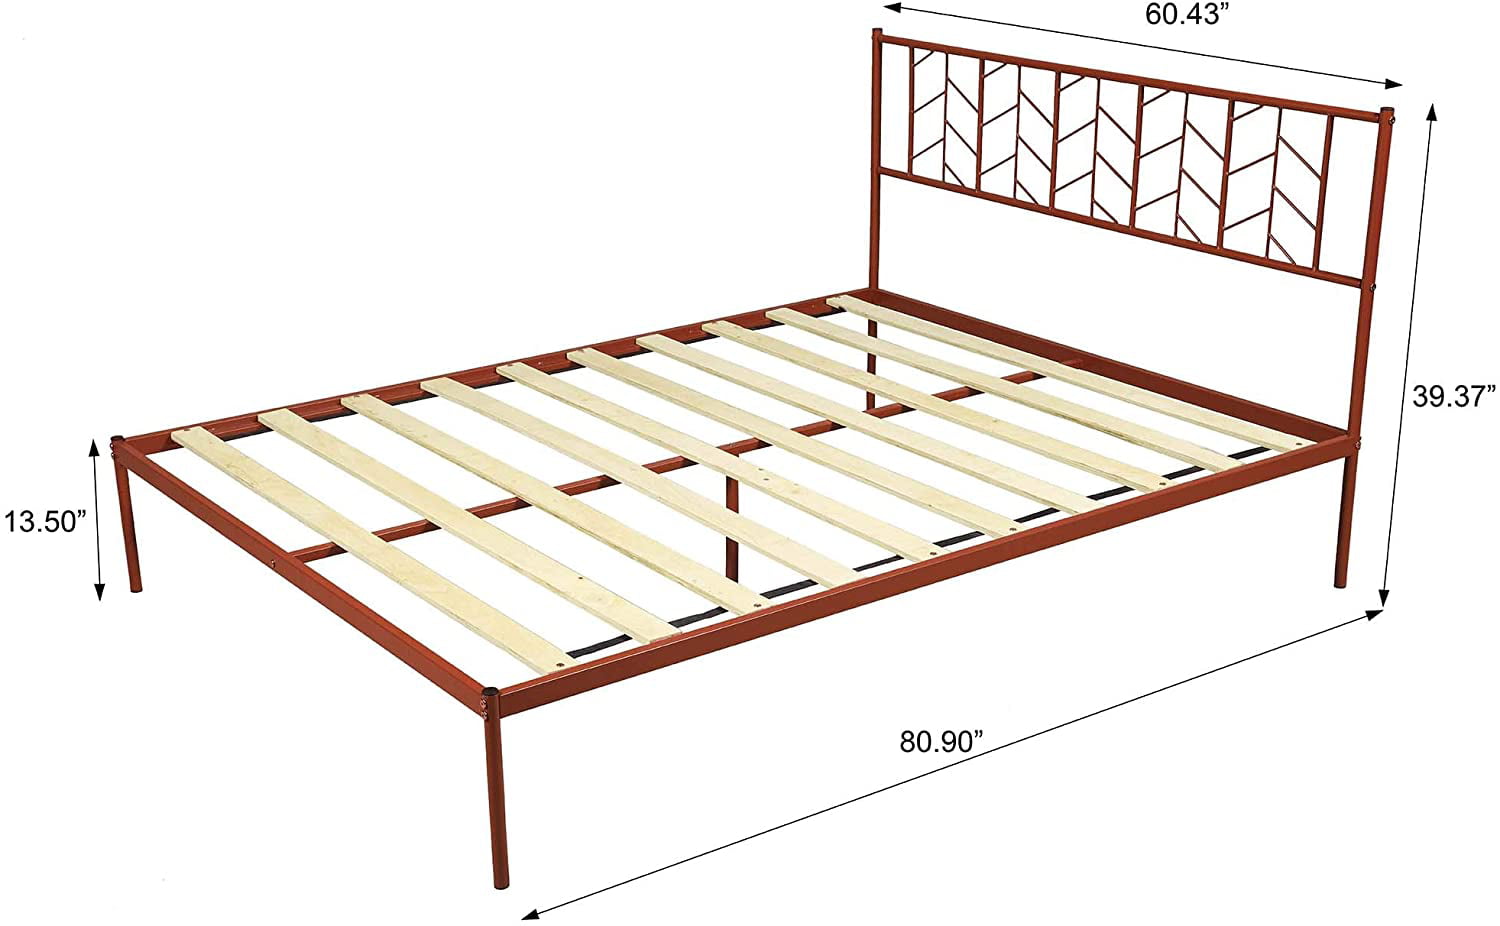 Virubi Queen Size Platform Bed Metal, 39 X 80 Bed Frame Dimensions In Feet